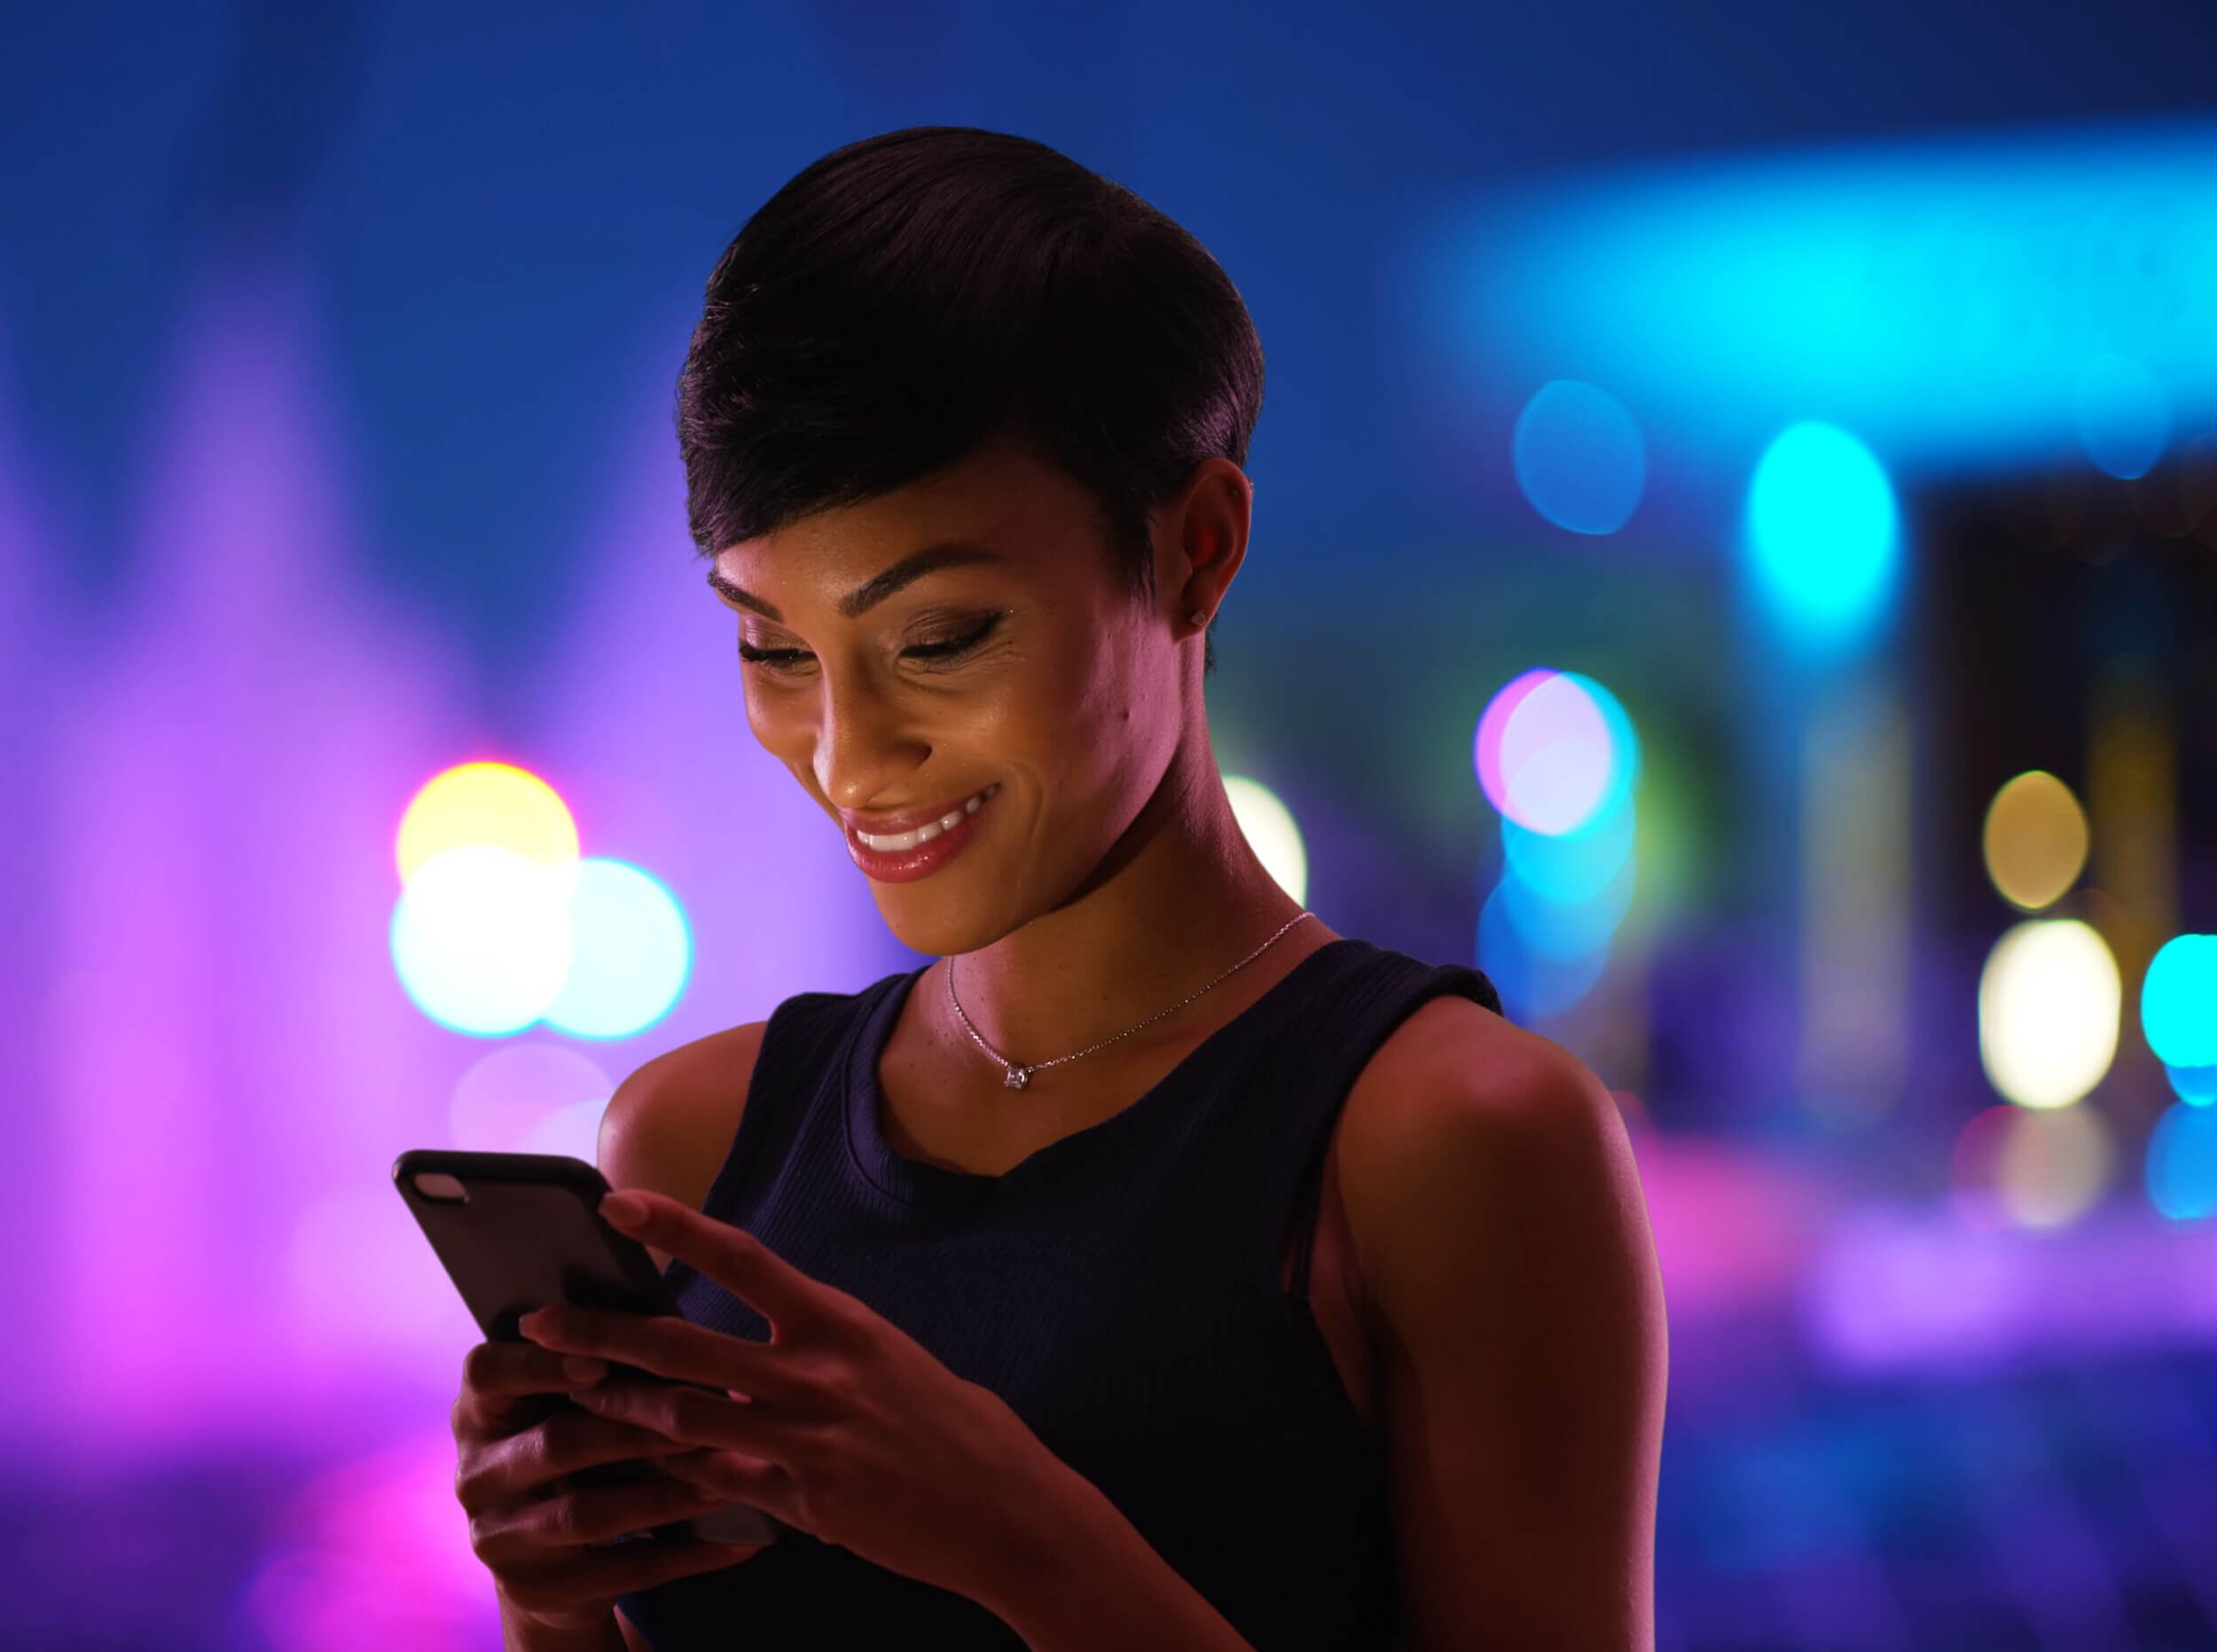 Young woman texting at night